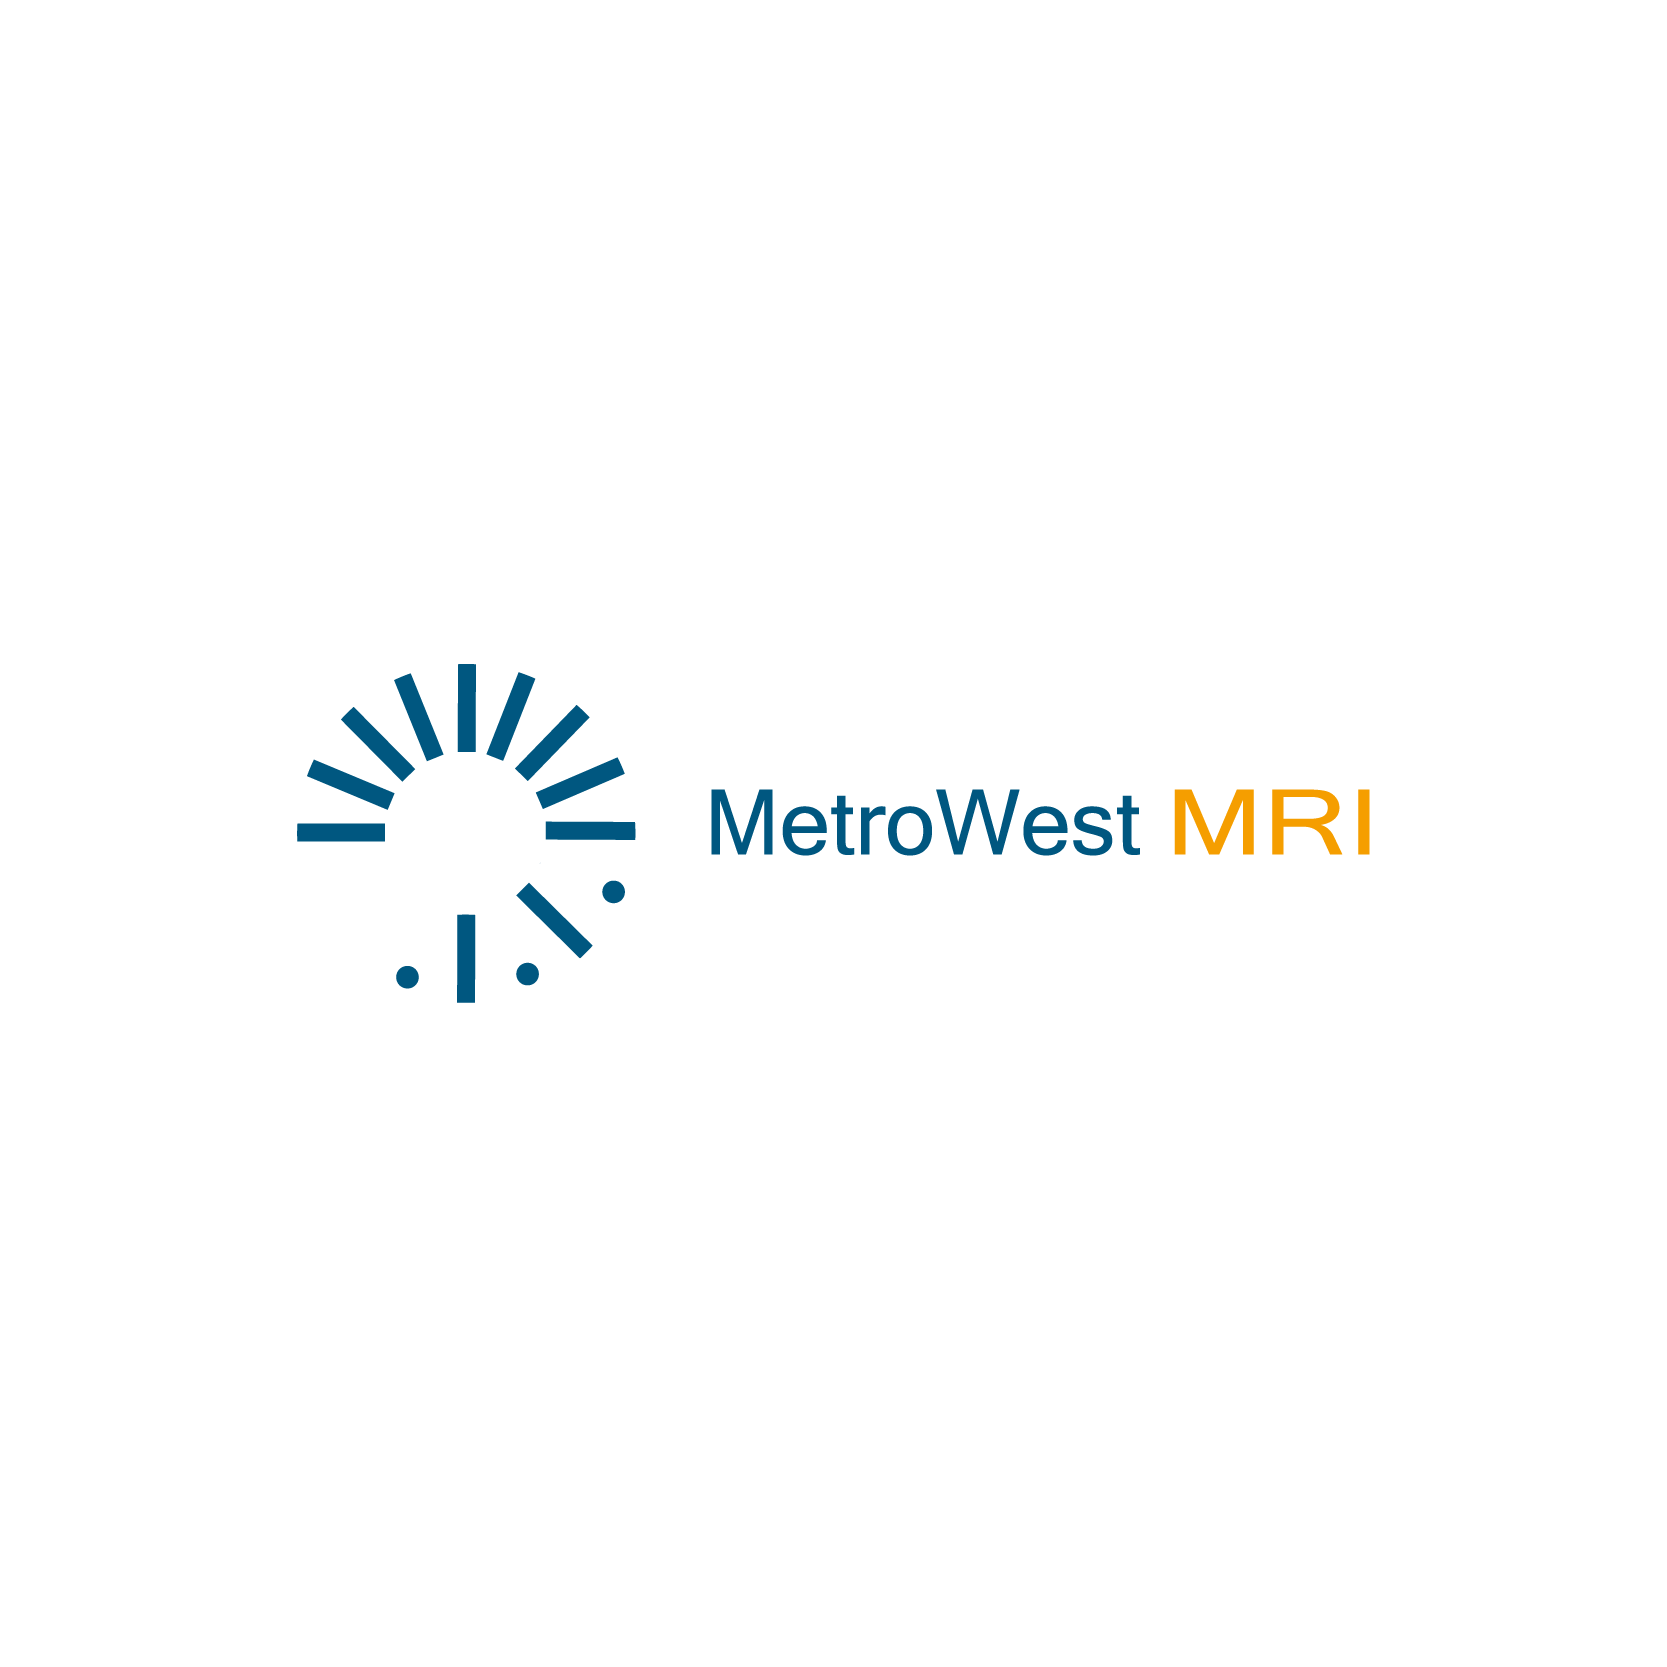 MetroWest MRI